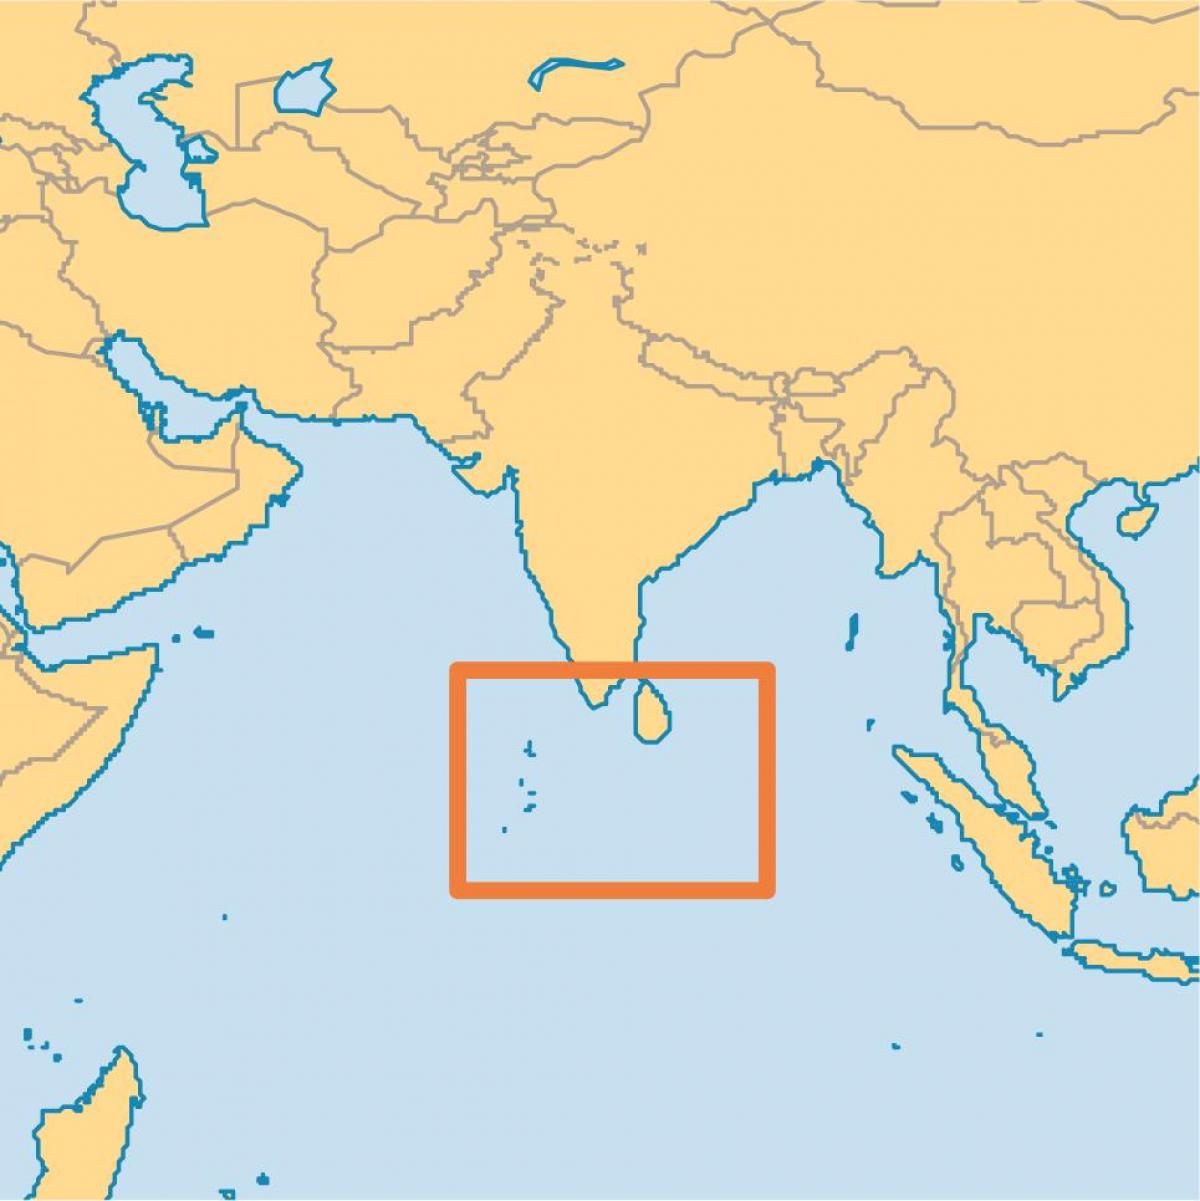 maldives island location on world map